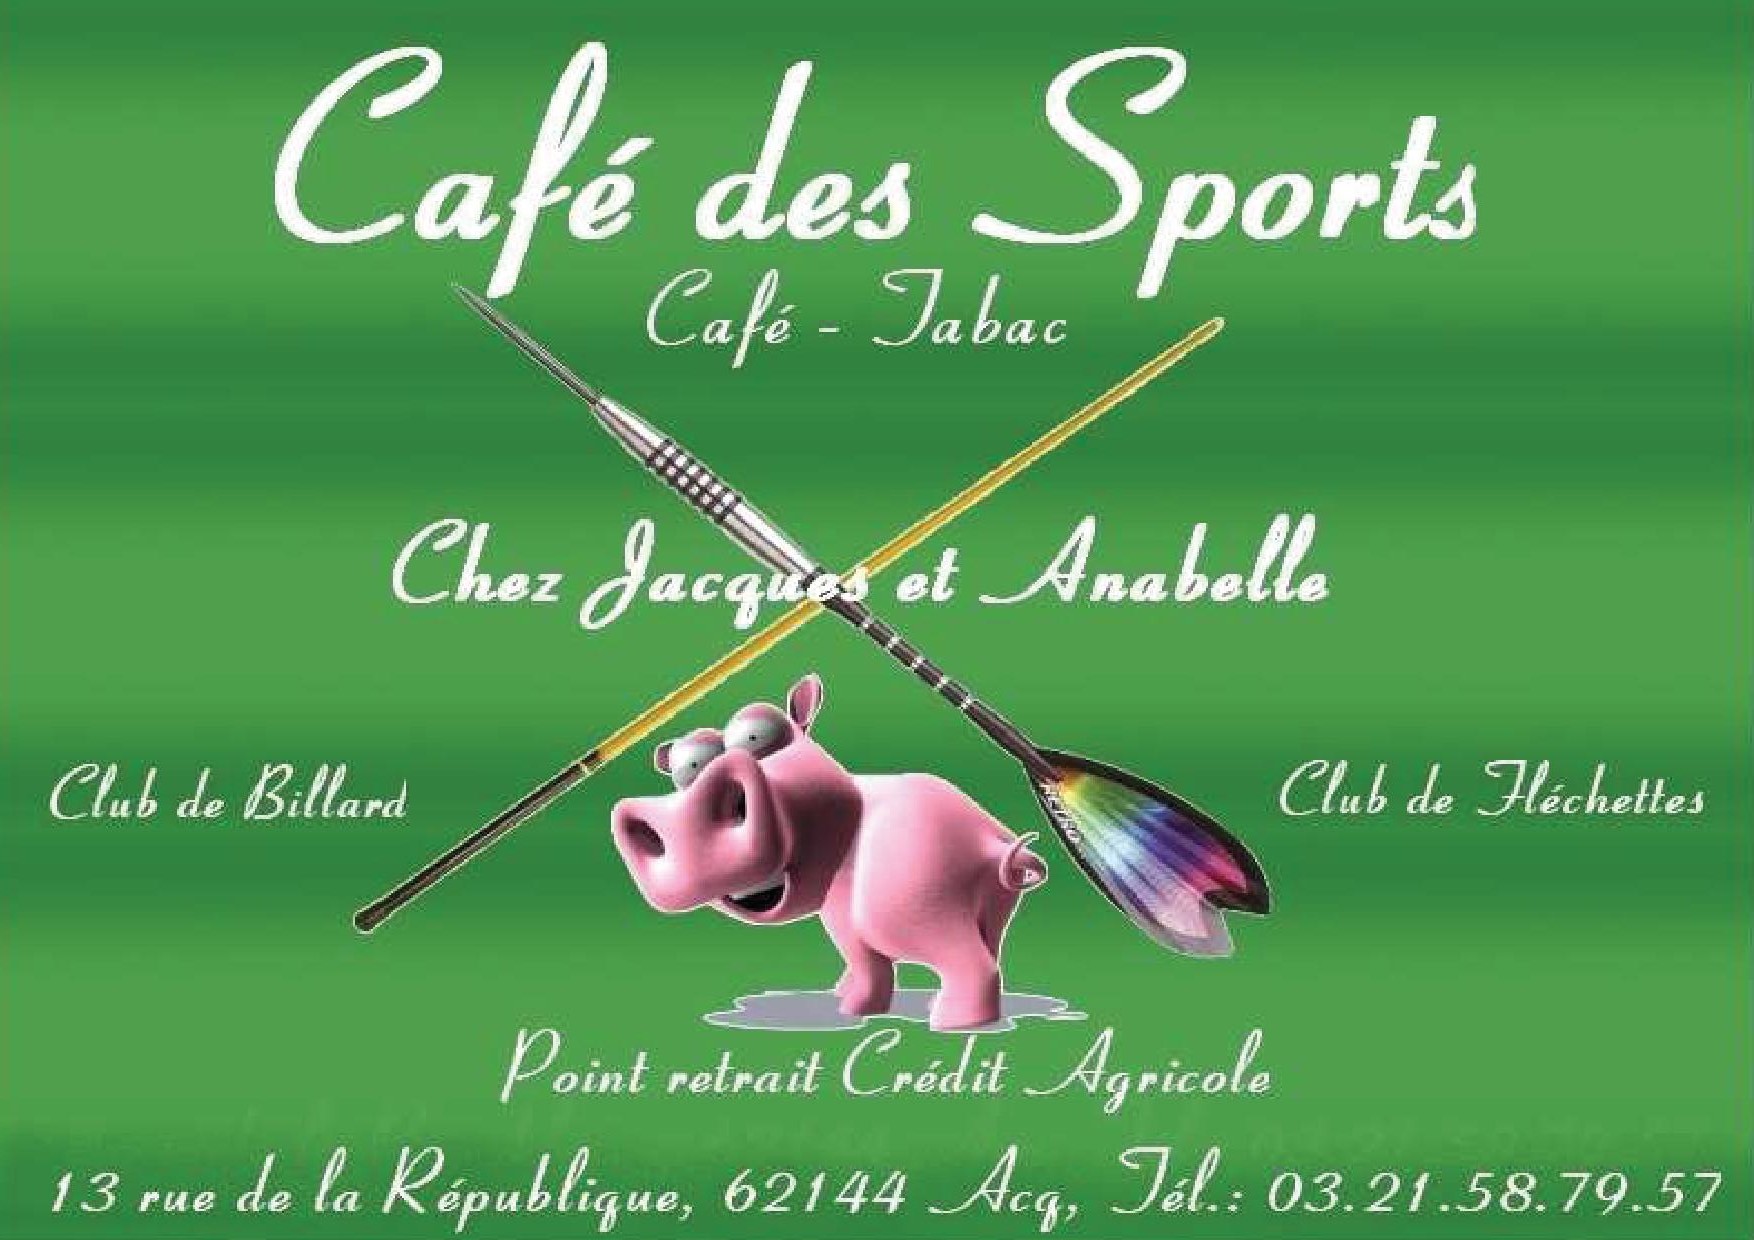 Café des sports.jpg